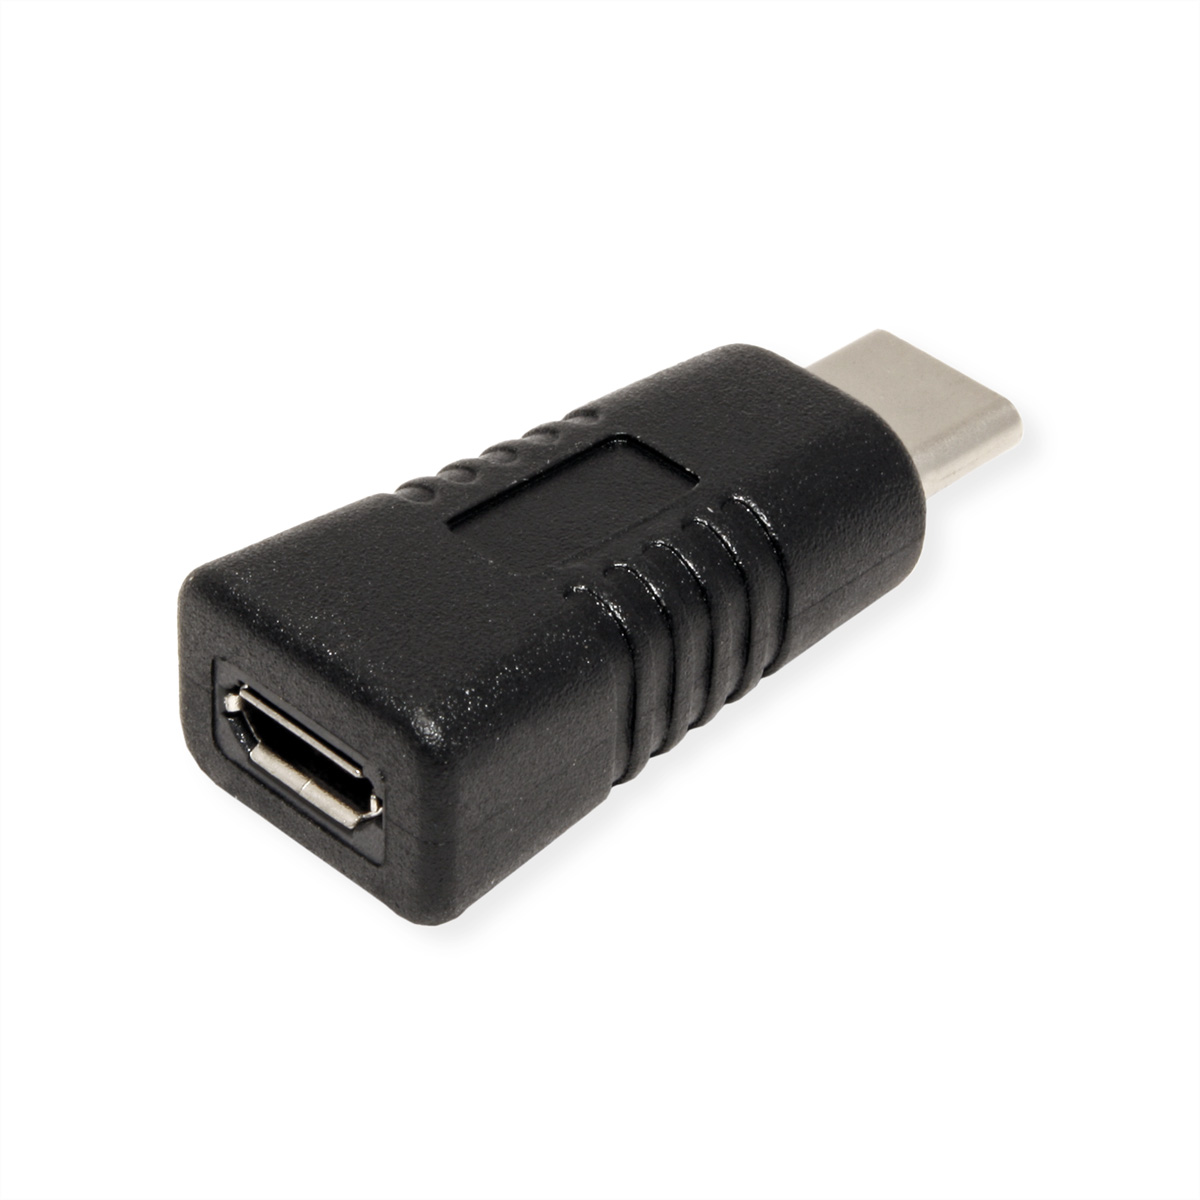 VALUE USB ST/BU, Micro OTG Adapter - C MicroB, Typ USB 2.0 Adapter,